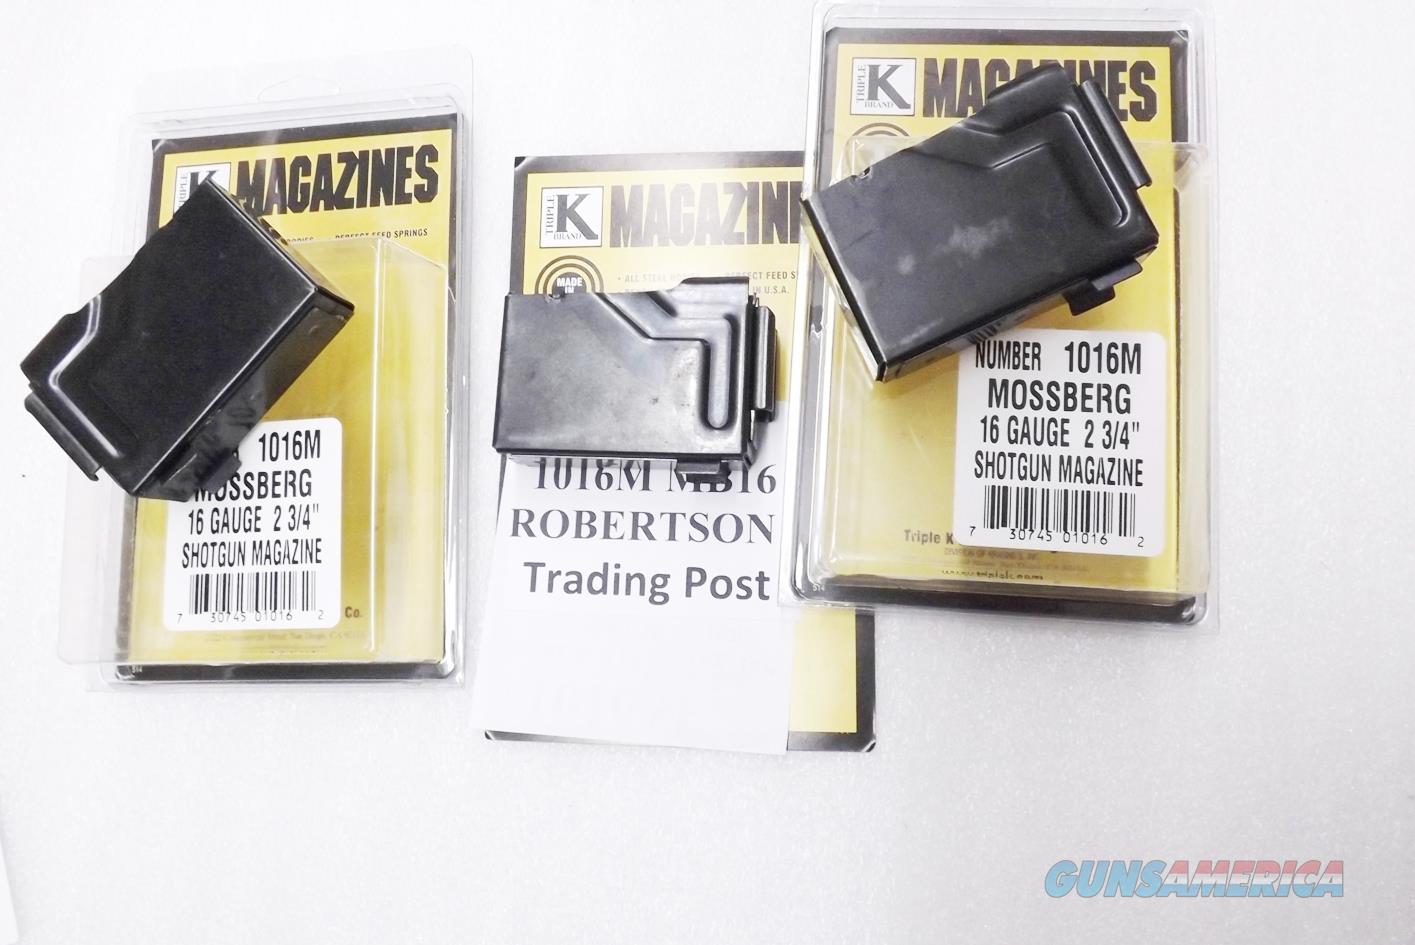 Triple K 1016M 2 Rounds Magazine for sale online 